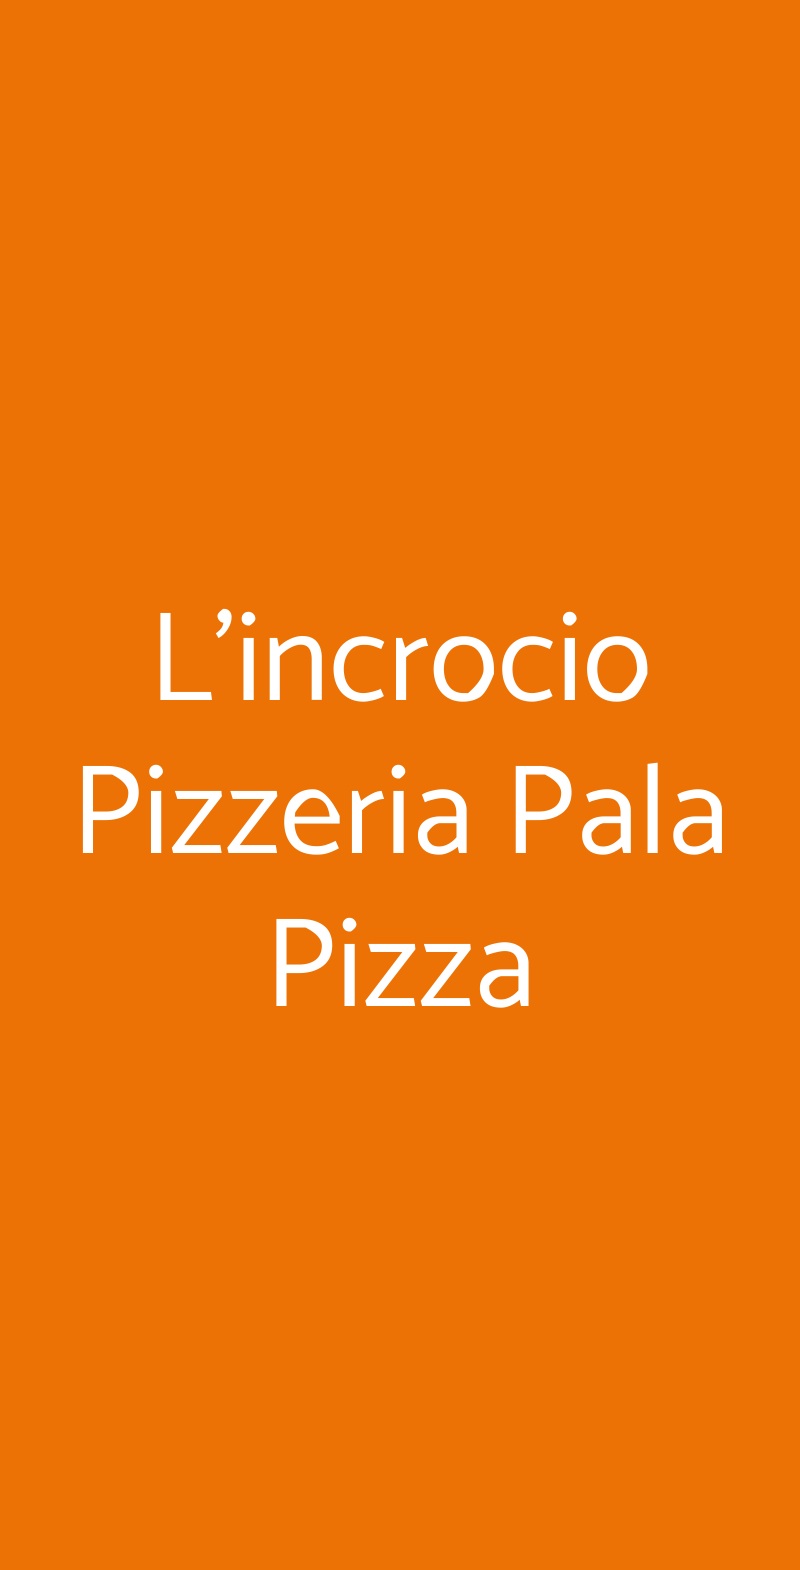 L'incrocio Pizzeria Pala Pizza Roma menù 1 pagina